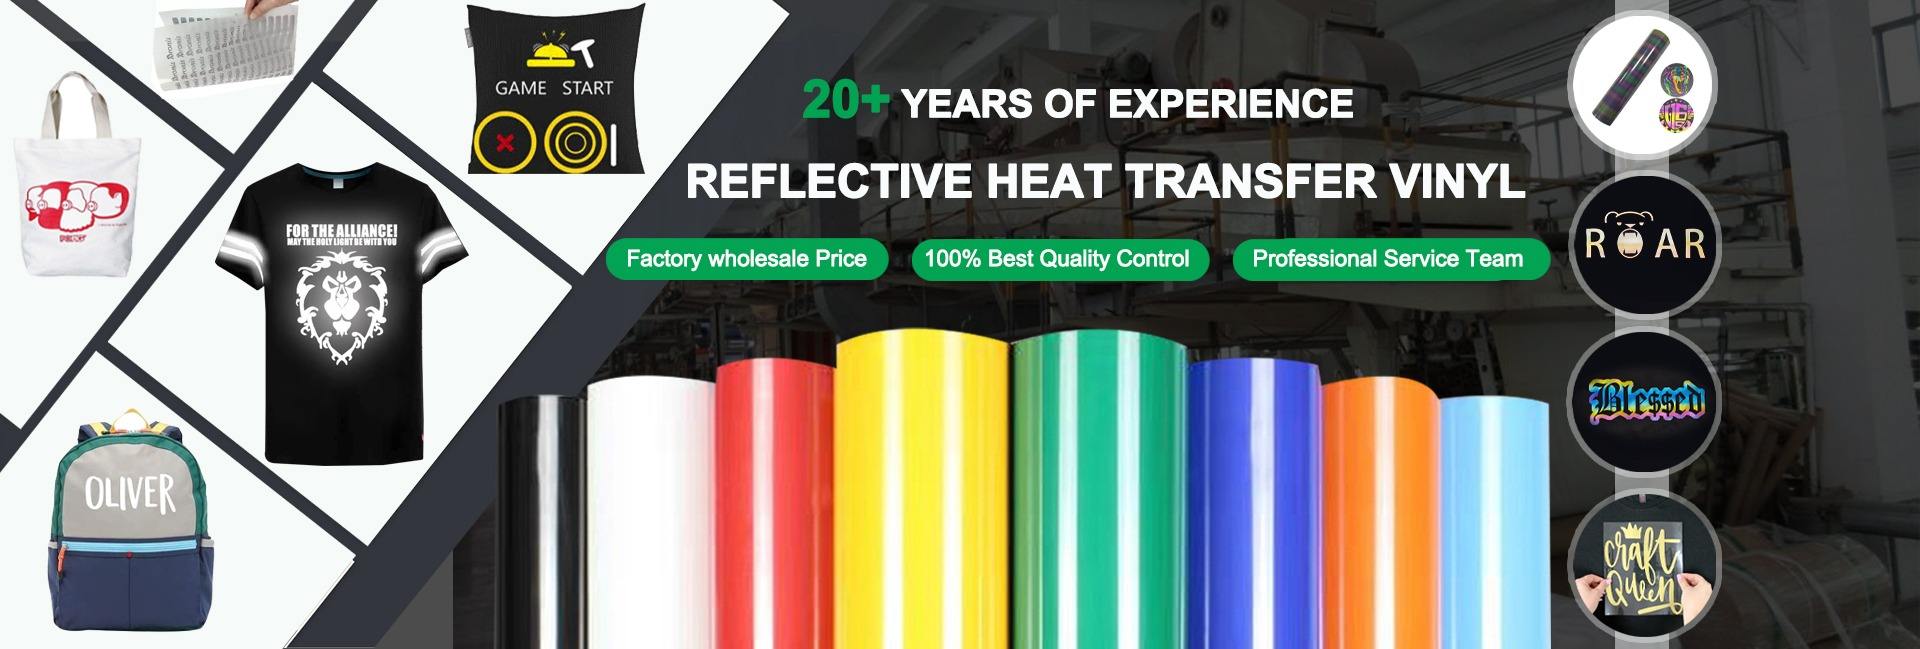 Reflective Heat Transfer Vinyl Manufacturer